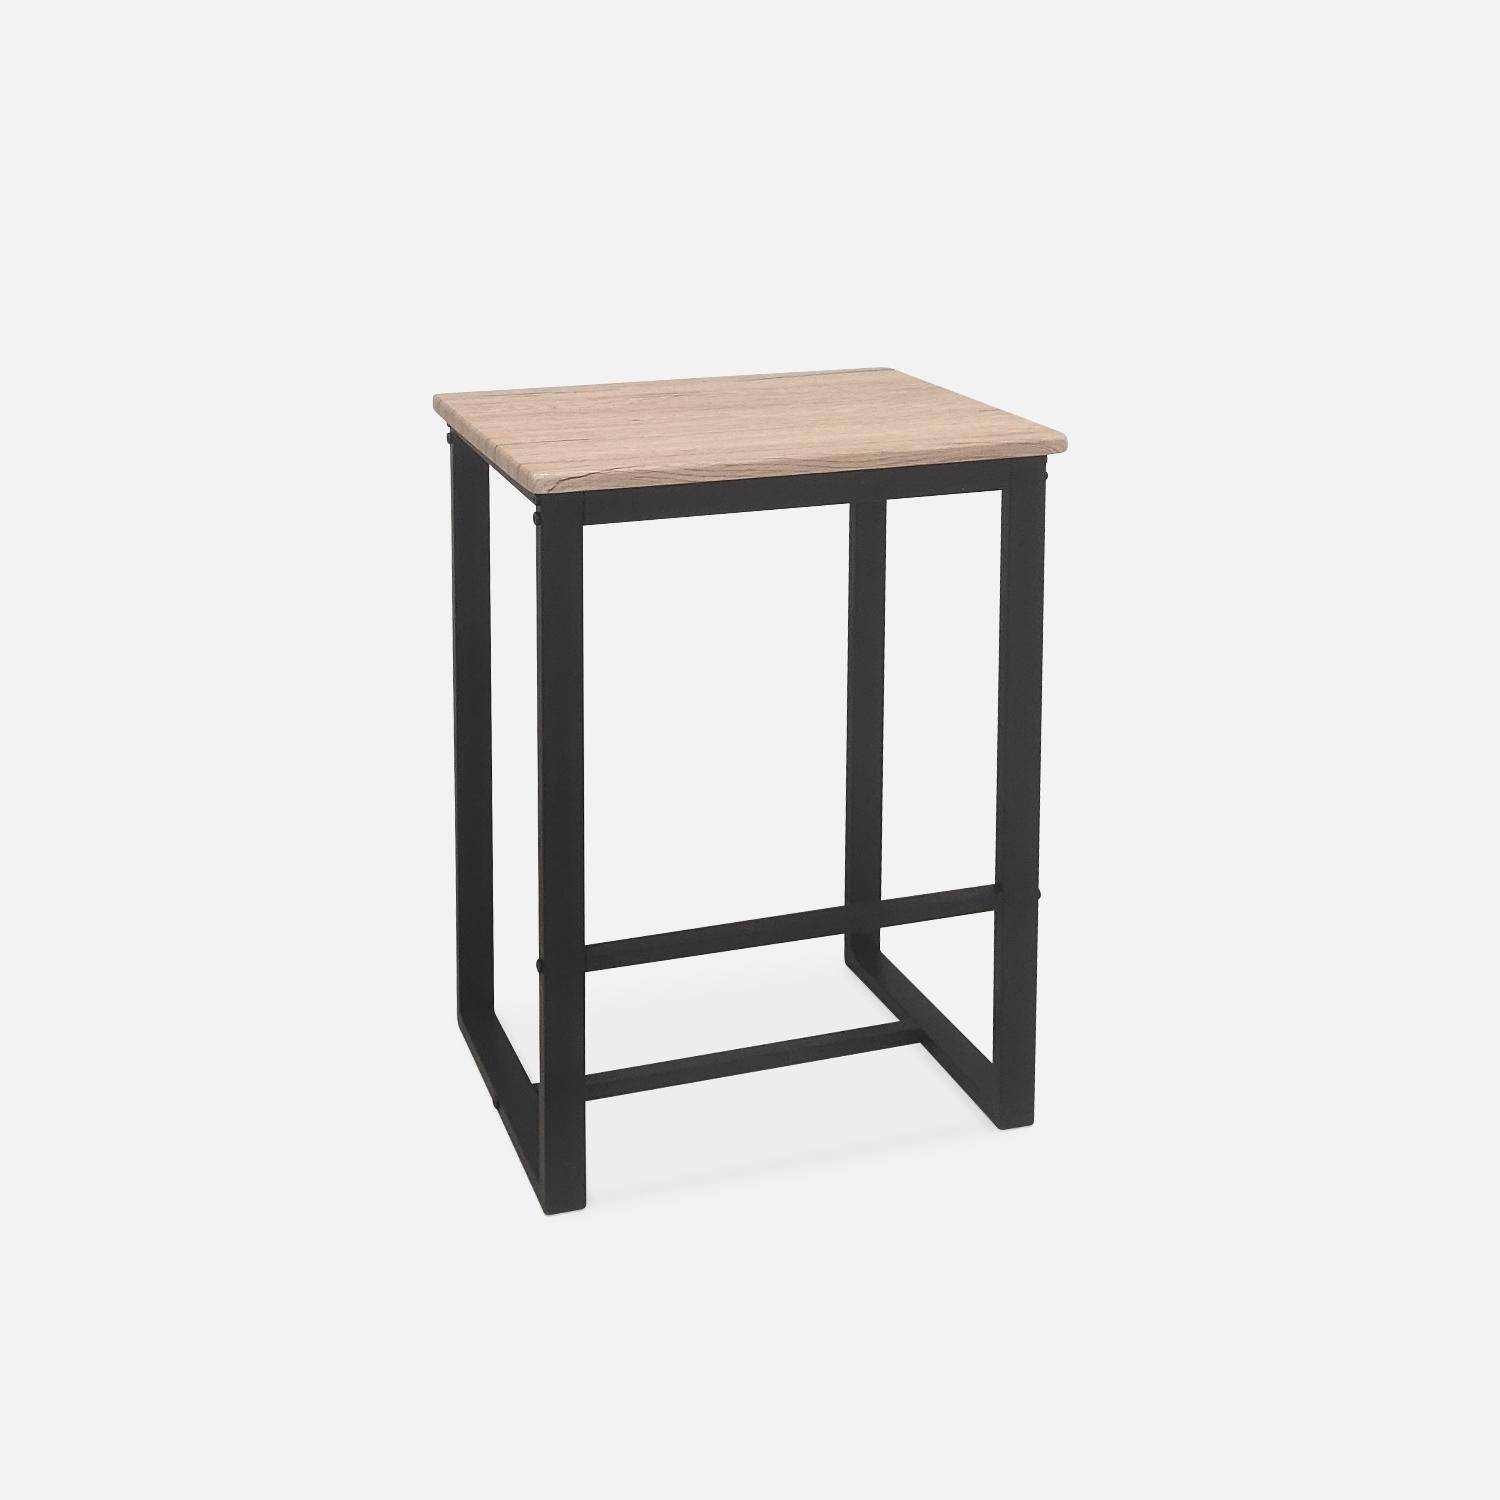 Industrial bar style table set with 4 stools, dining set 100x60x90cm - Loft - Black,sweeek,Photo5